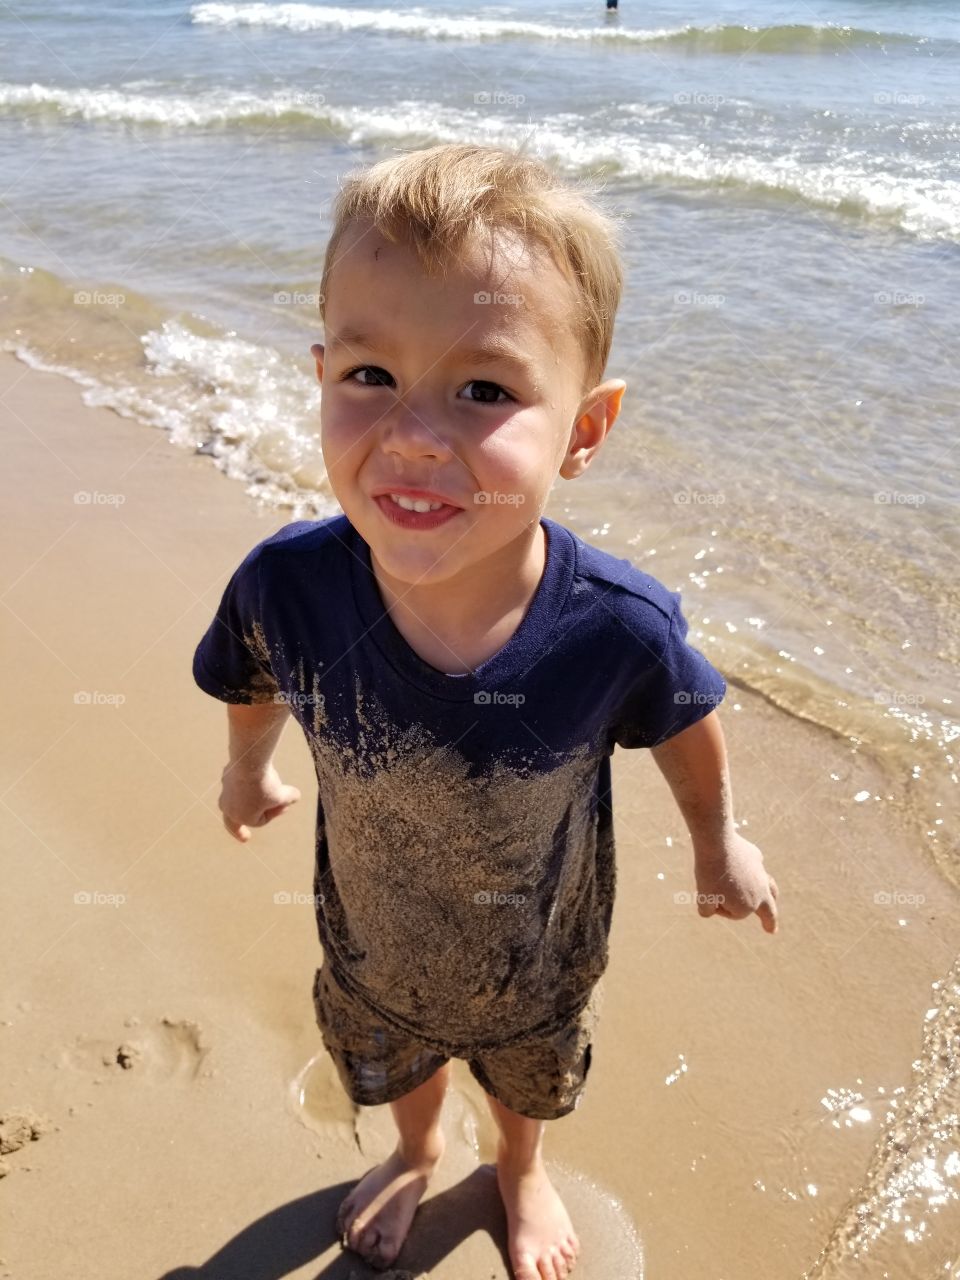 Child, Beach, Water, Sand, Sea